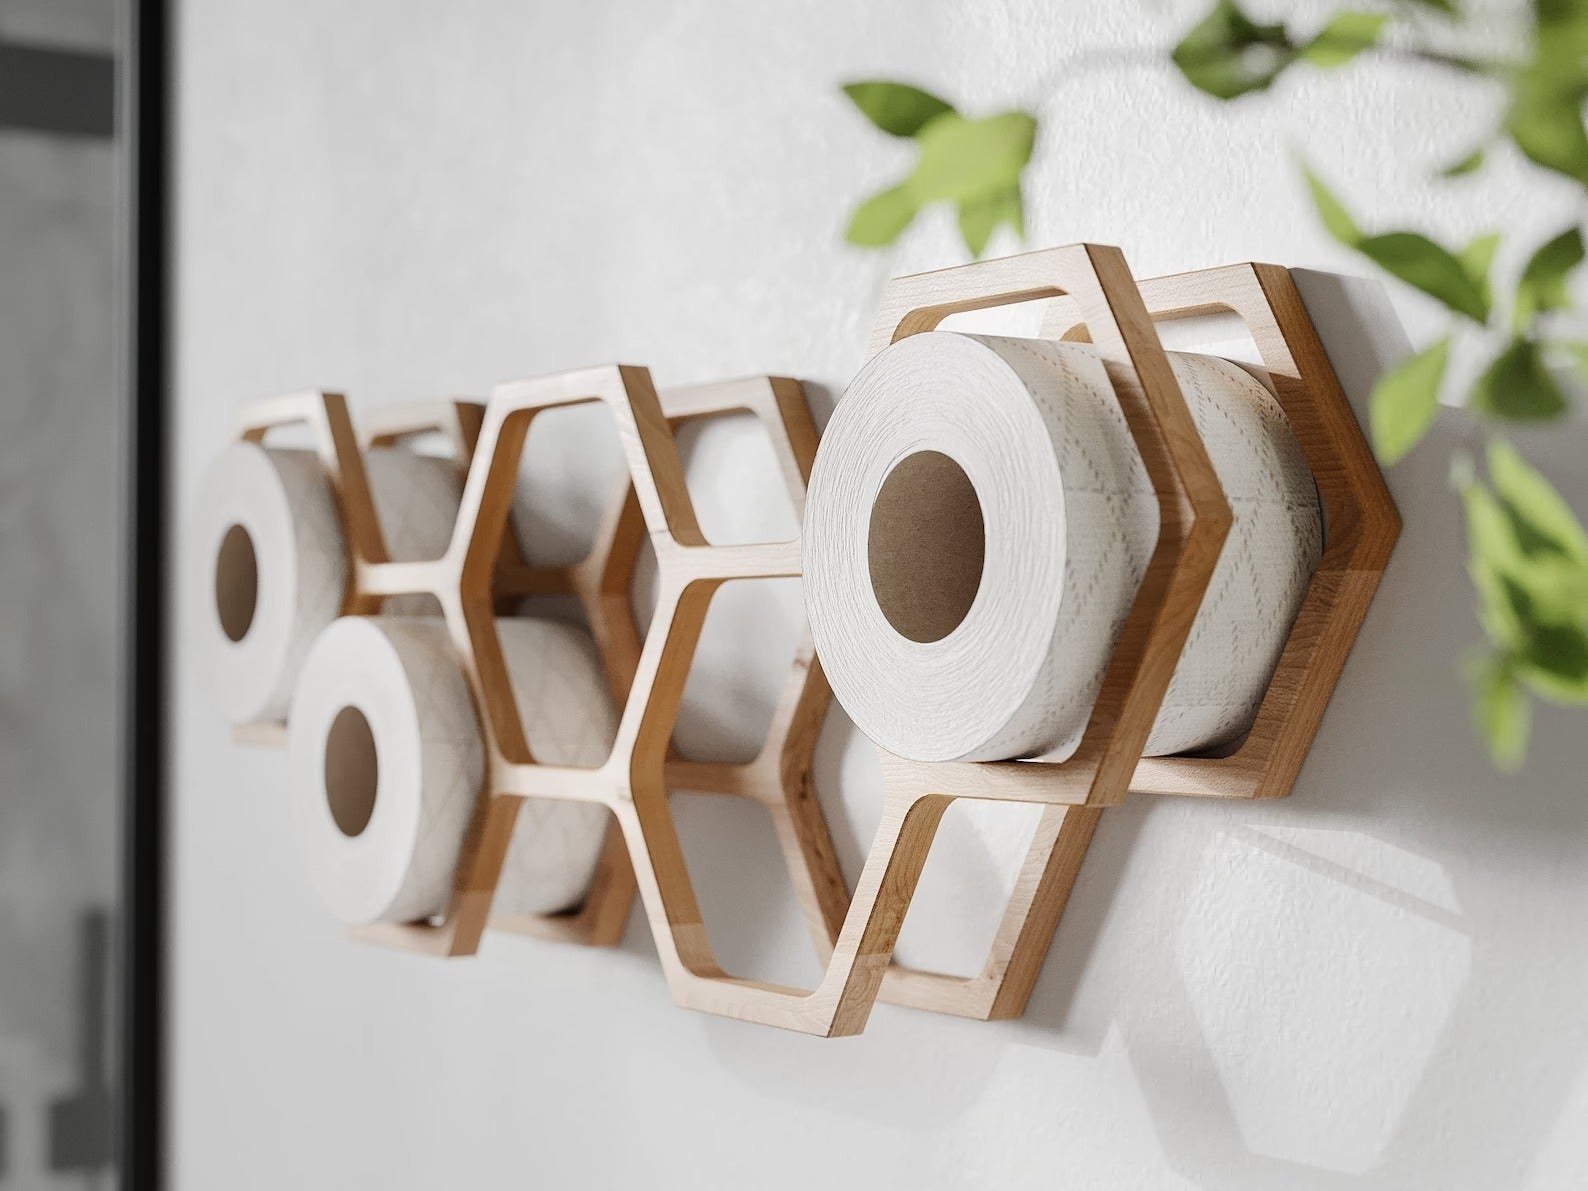 hexagonal shelf on wall holding rolls of toilet paper